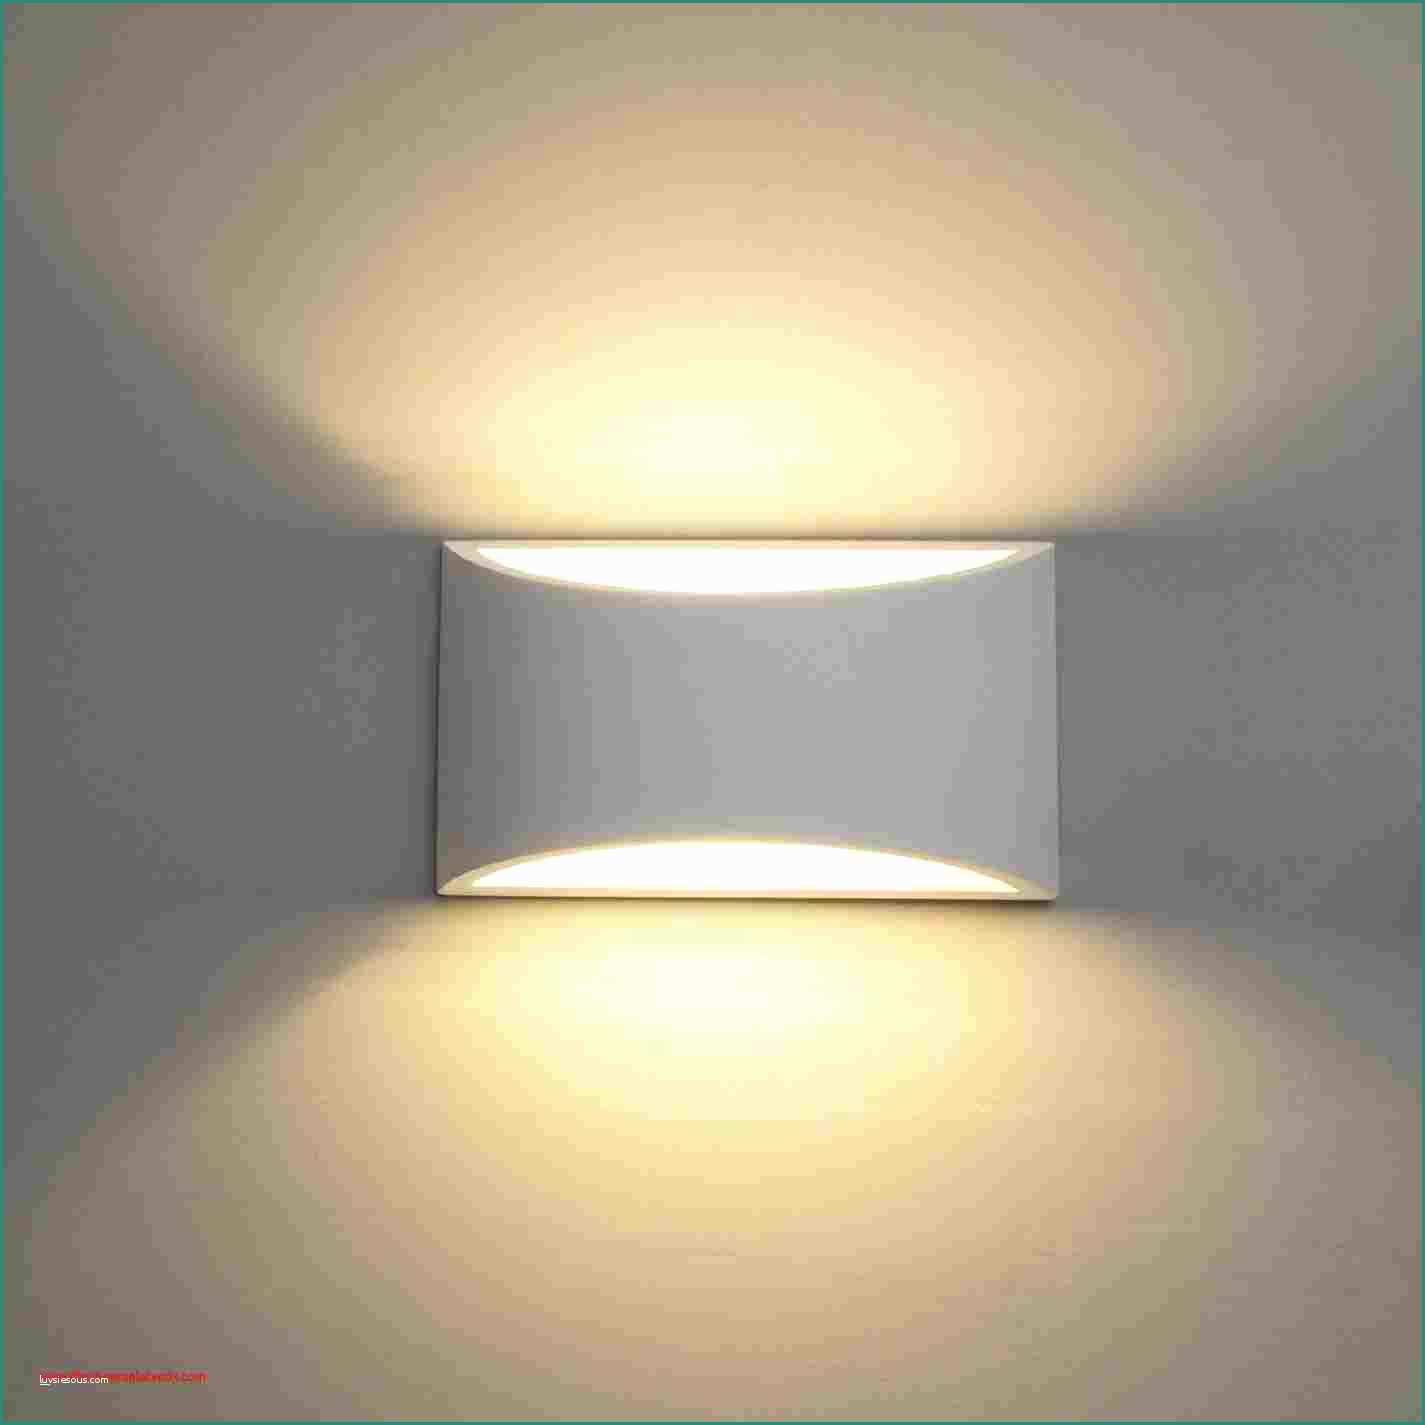 Lampada Led Rs Mm Dimmerabile E Led Lampen Neue Bioledex Numo Led Lampen with Led Lampen Gallery